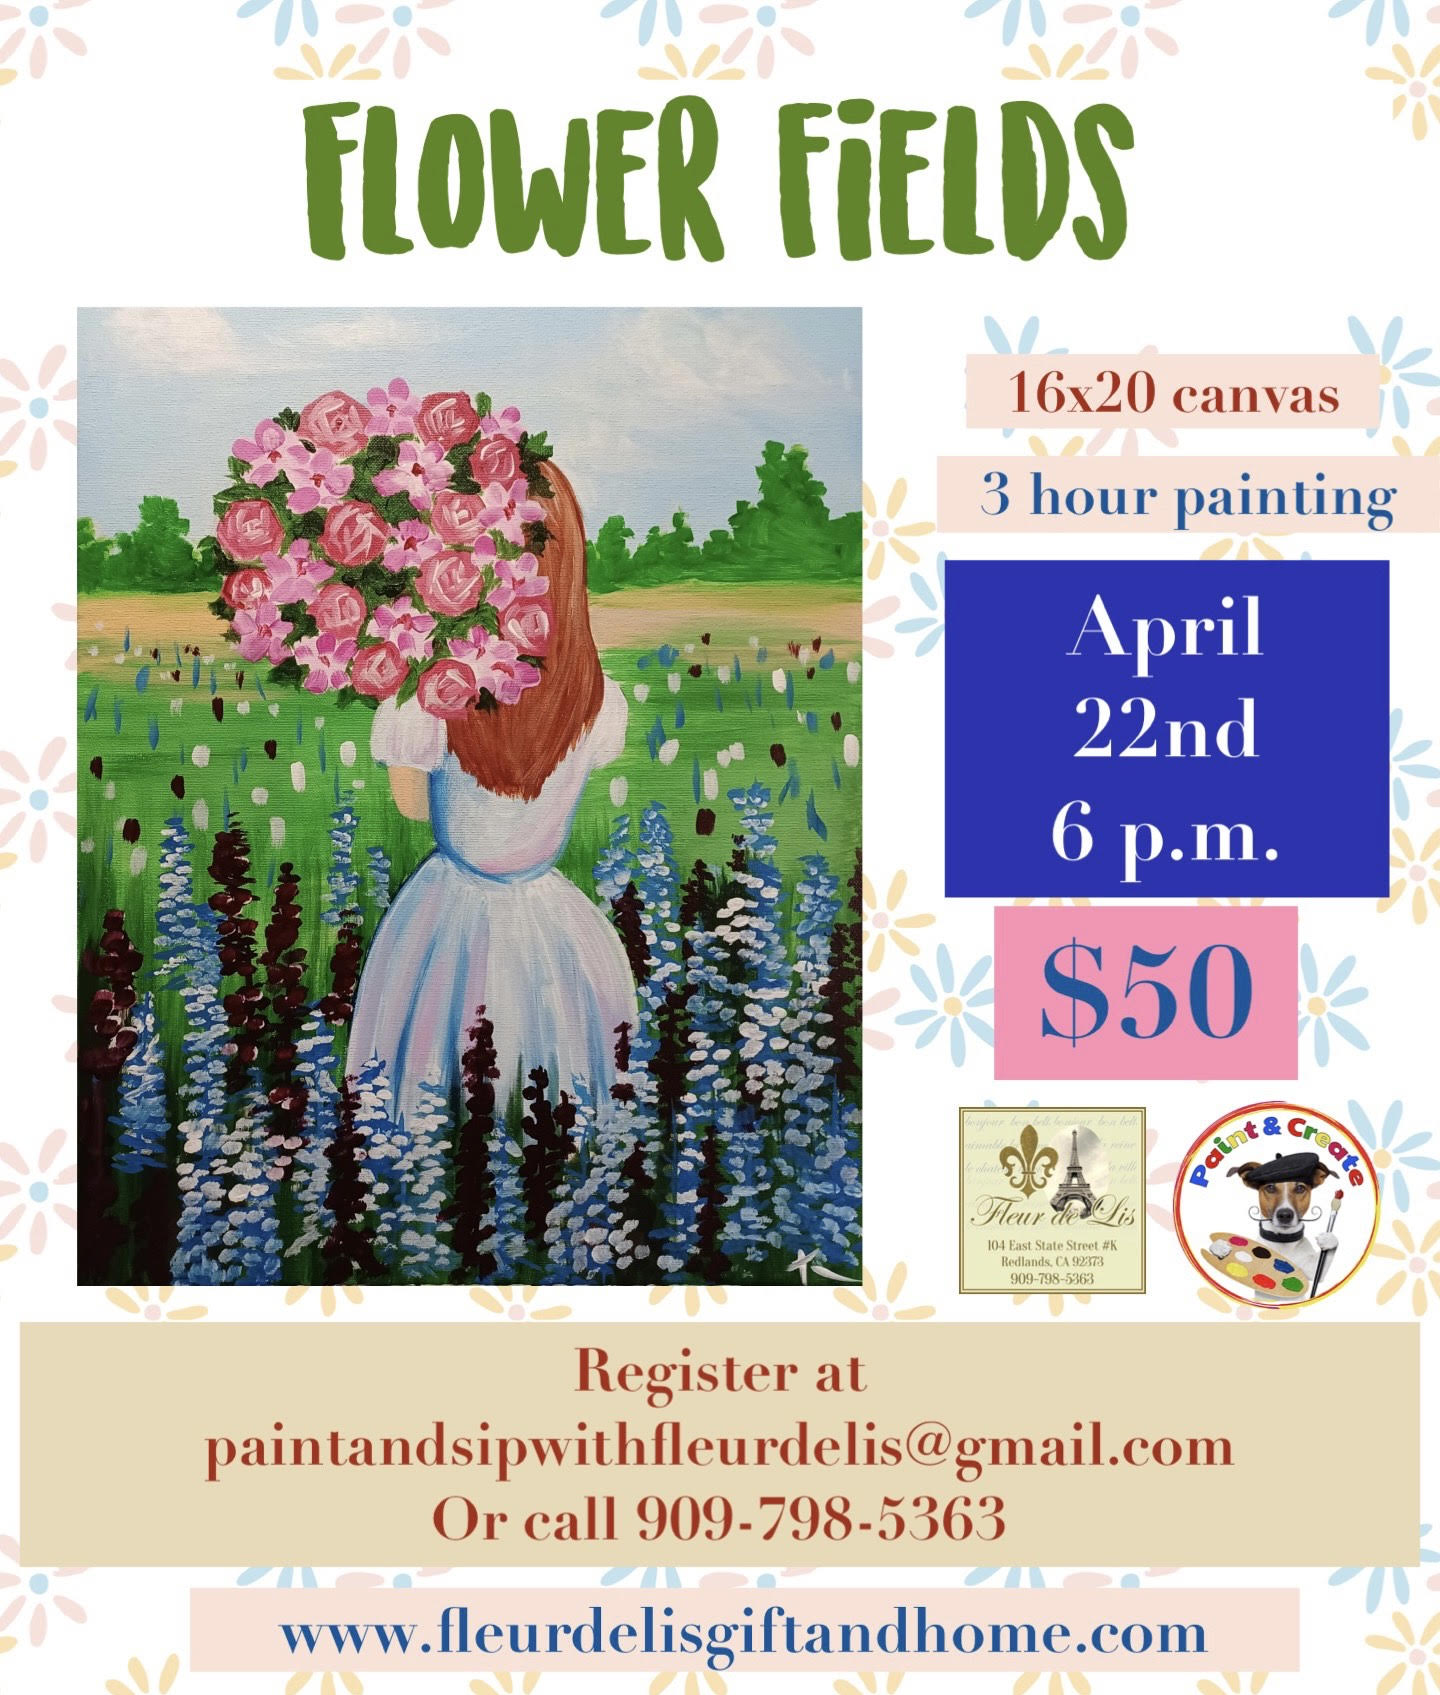 Flower Fields April 22nd 6 p.m.